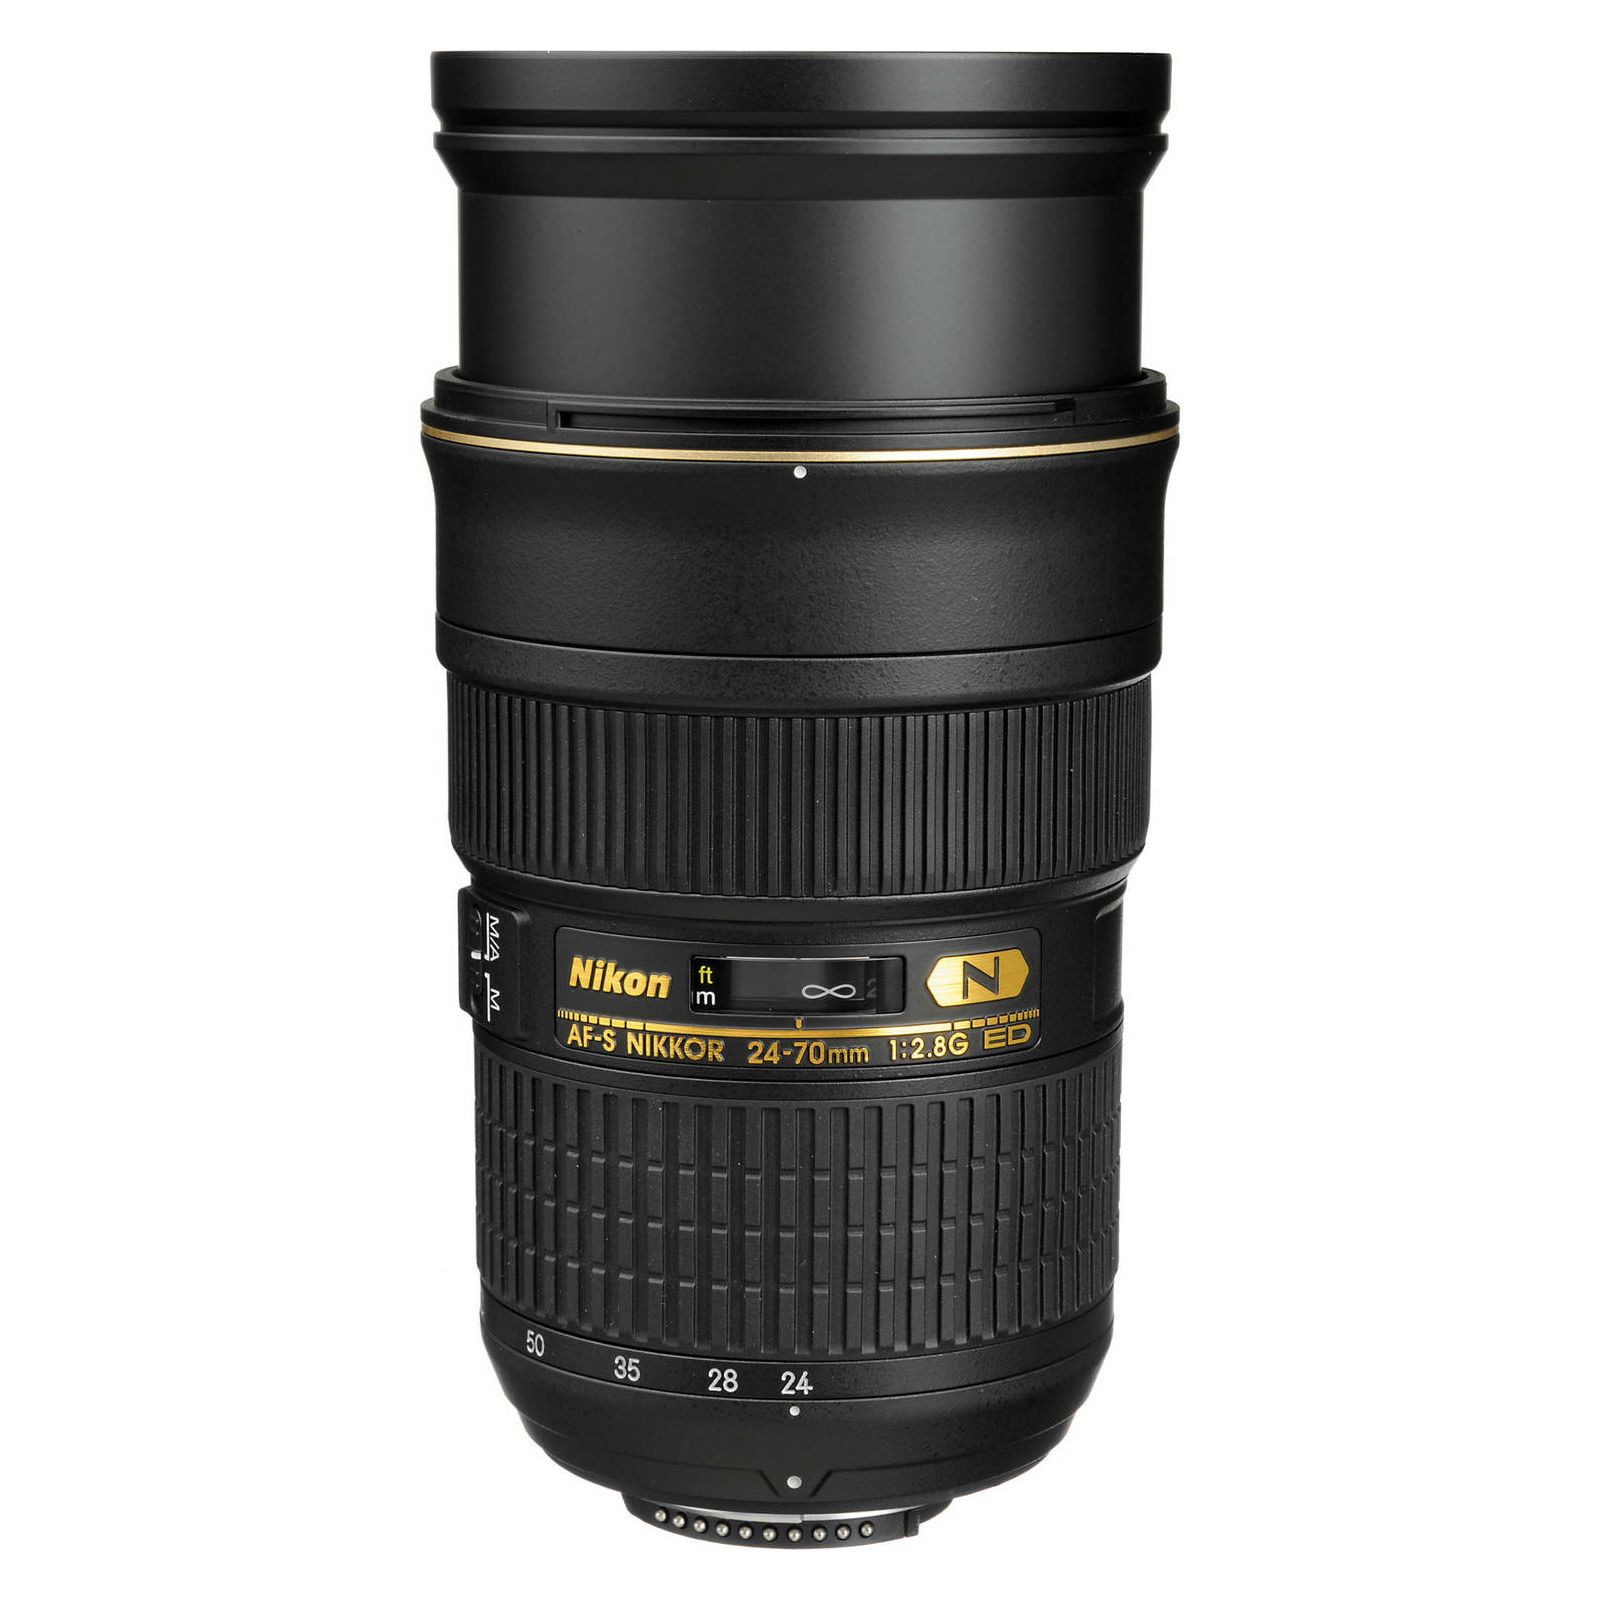 Nikon AF-S 24-70mm f/2.8G ED standardni objektiv Professional Nikkor 24-70 2.8 F2.8 G auto focus zoom lens (JAA802DA)